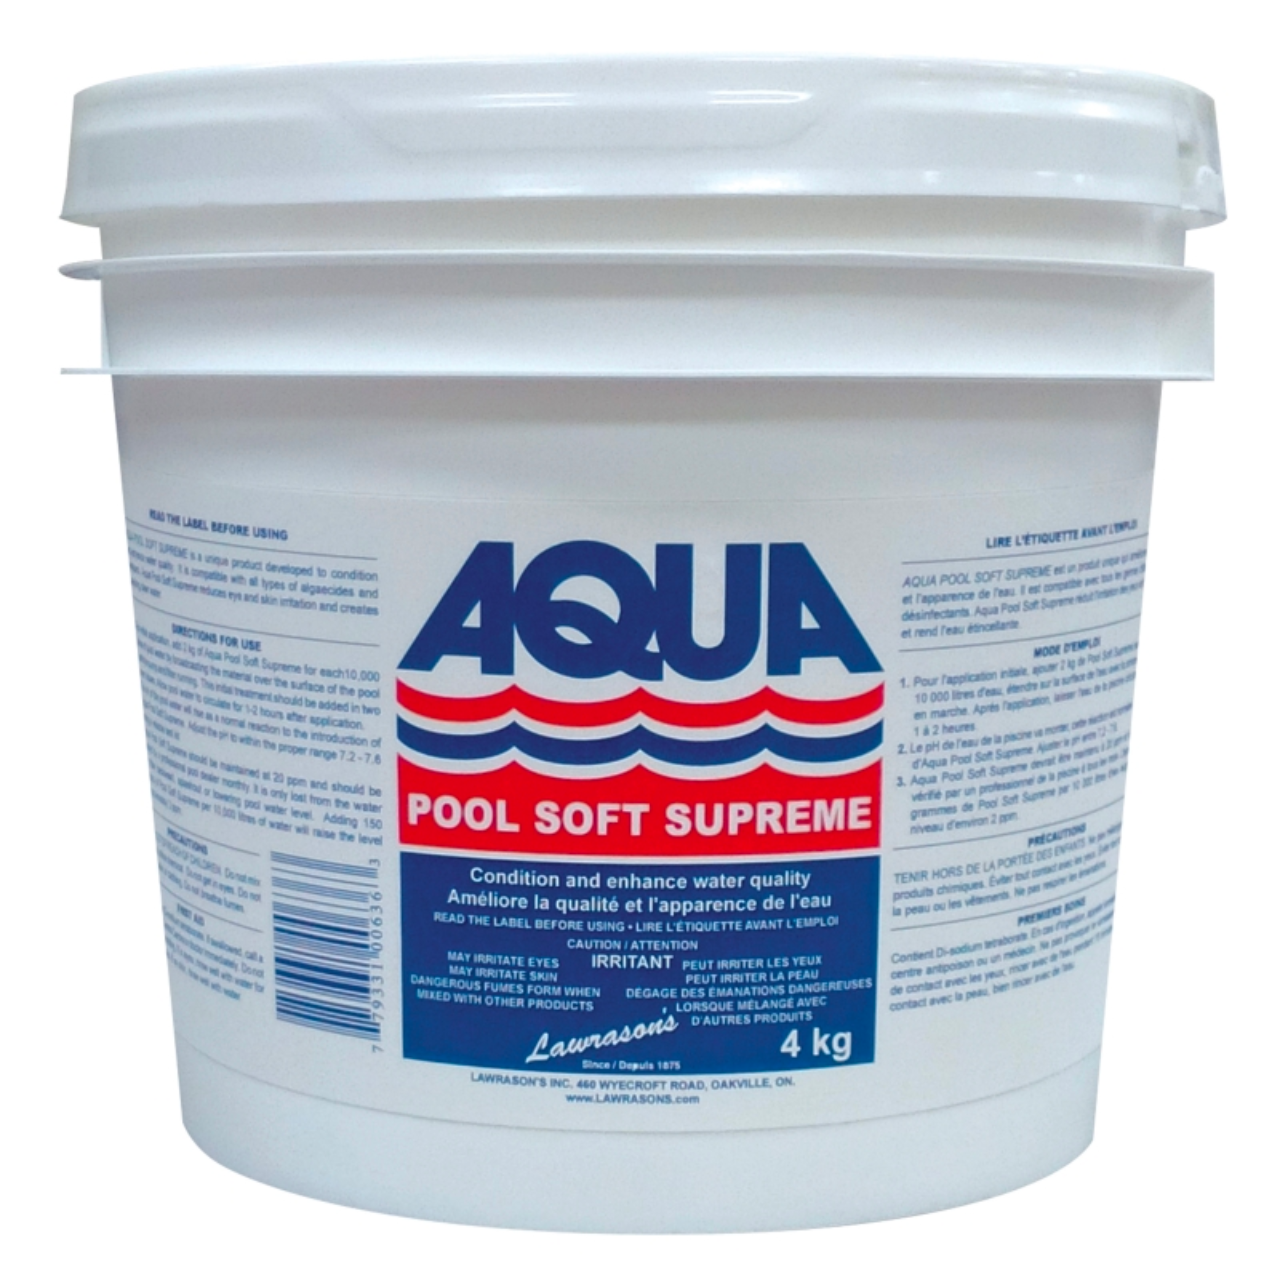 Aqua Pool Soft Supreme - Condition and Enhance Water Quality